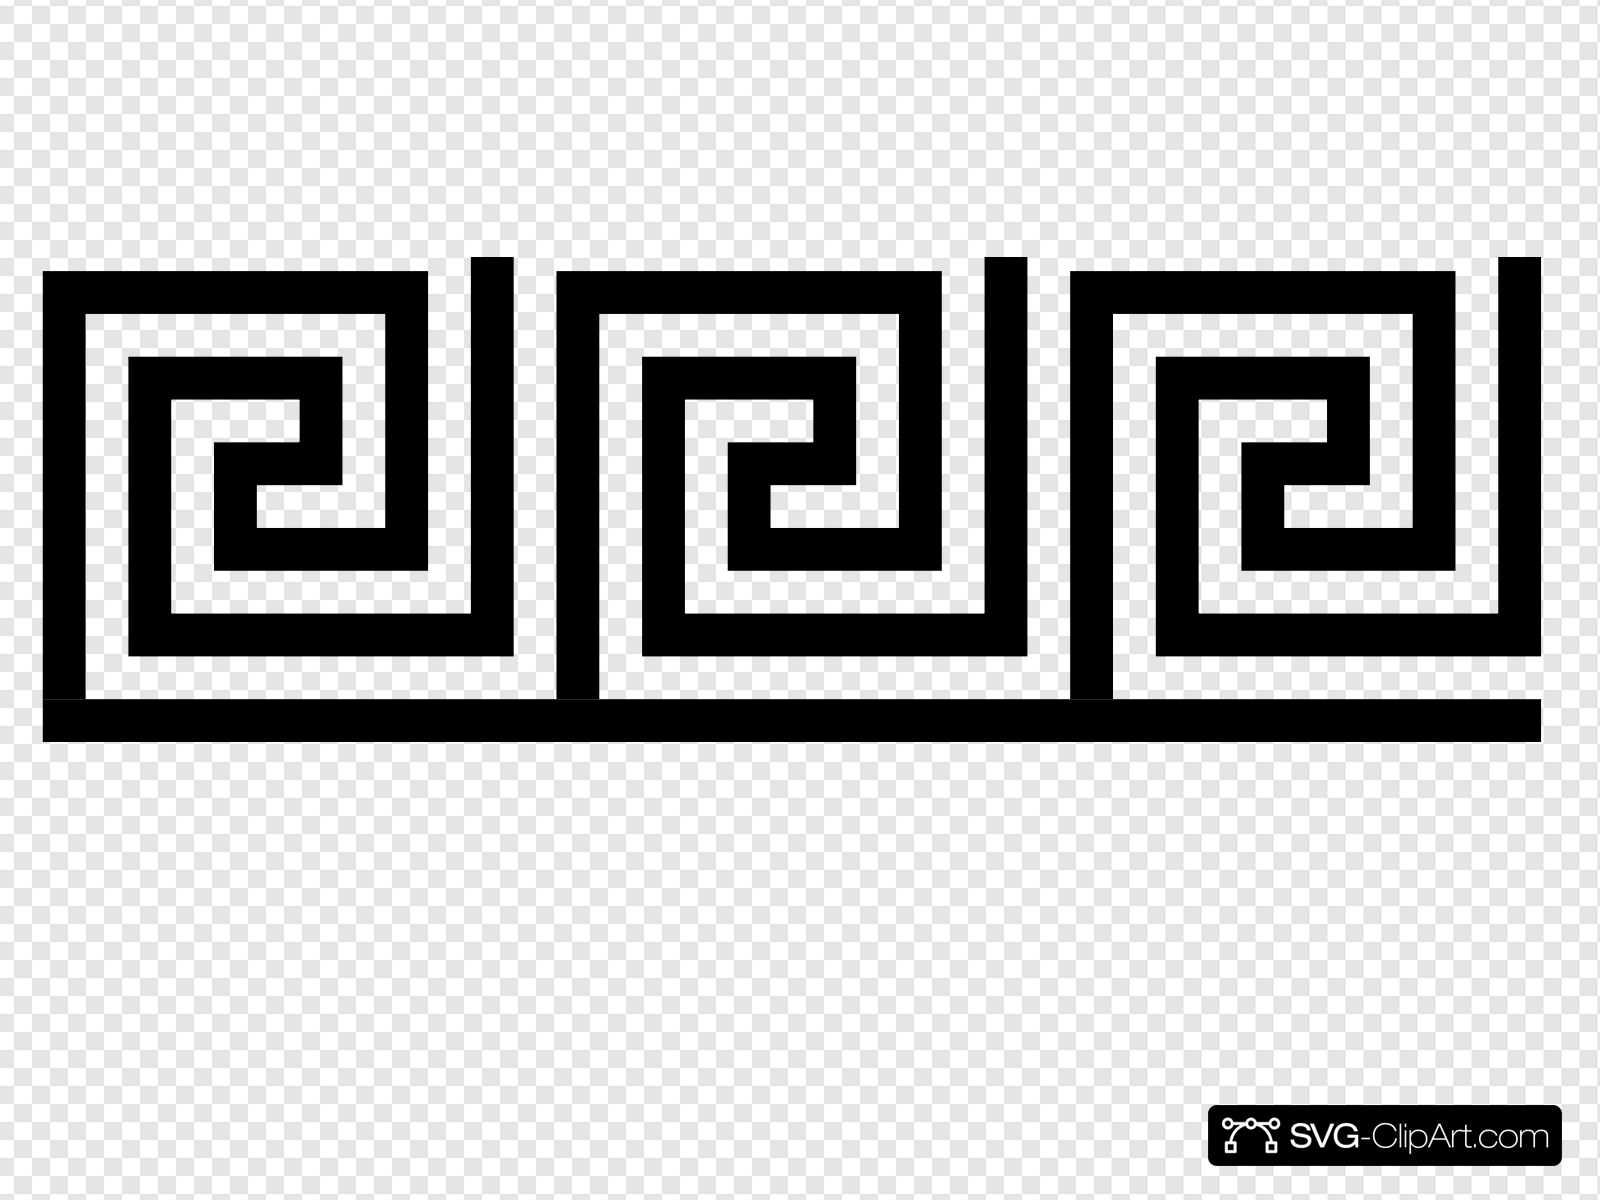 Black Greek Key Clip art, Icon and SVG.